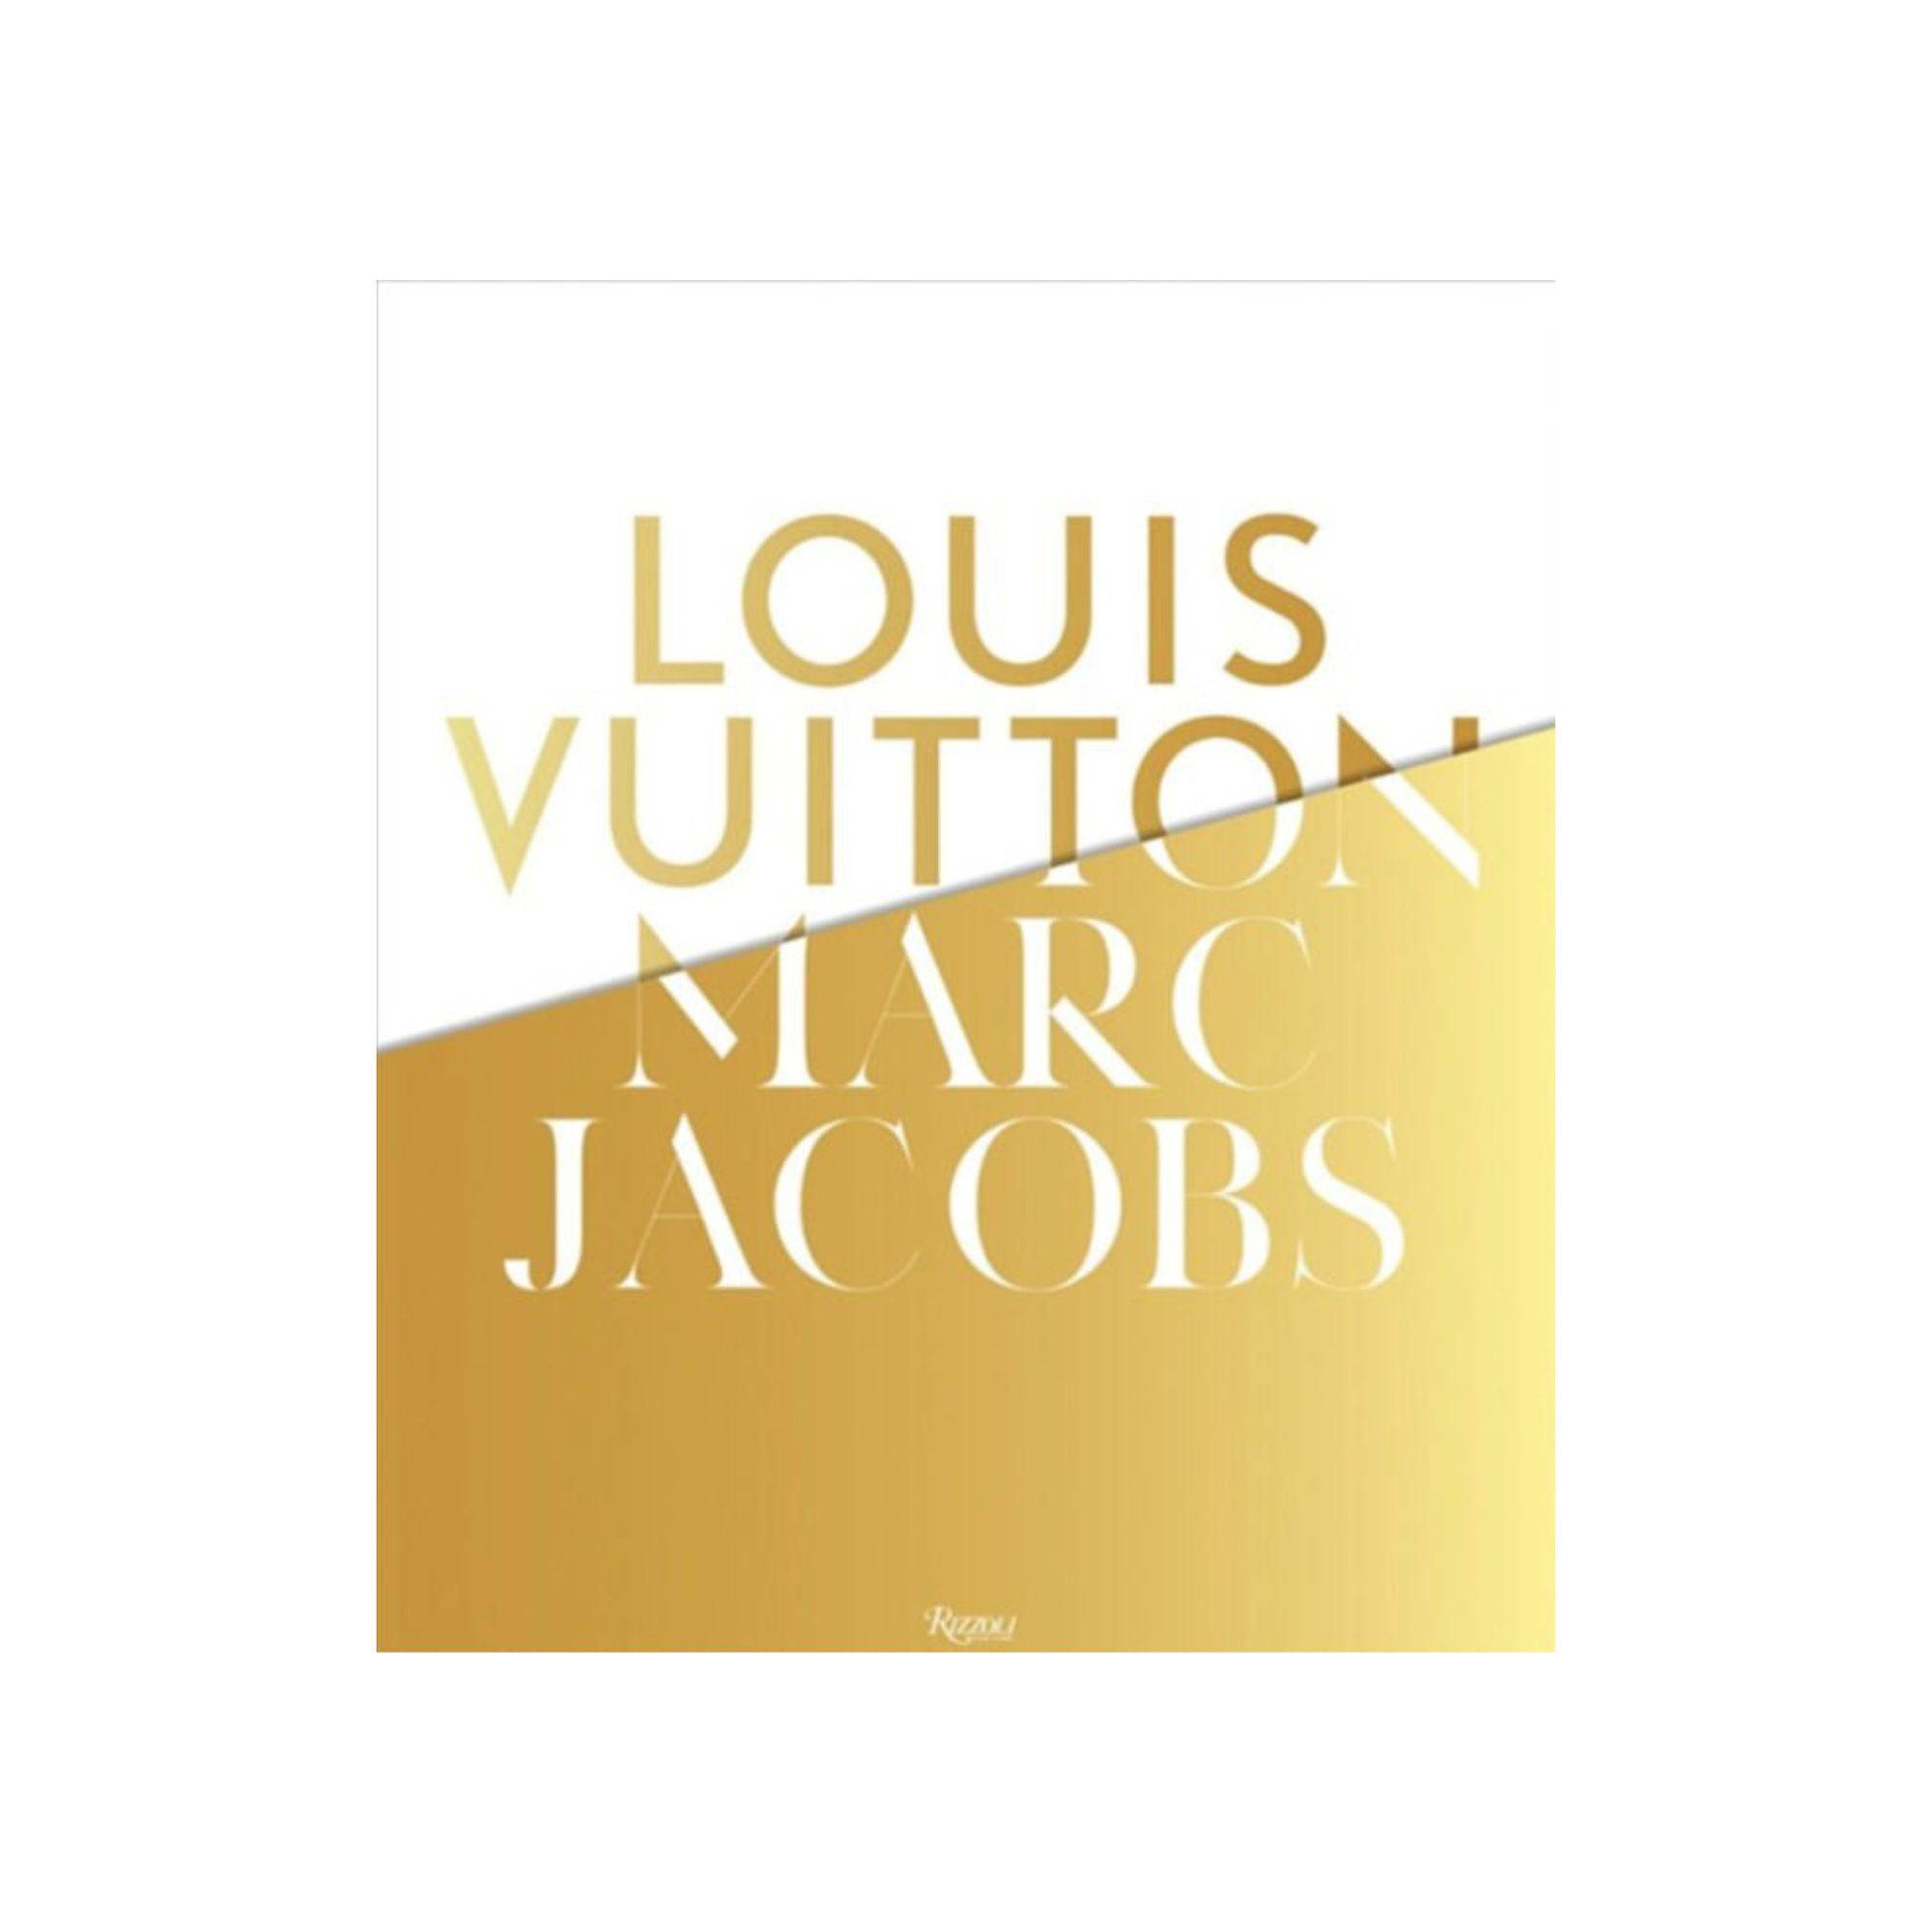 Louis Vuitton/Marc Jacobs - THAT COOL LIVING